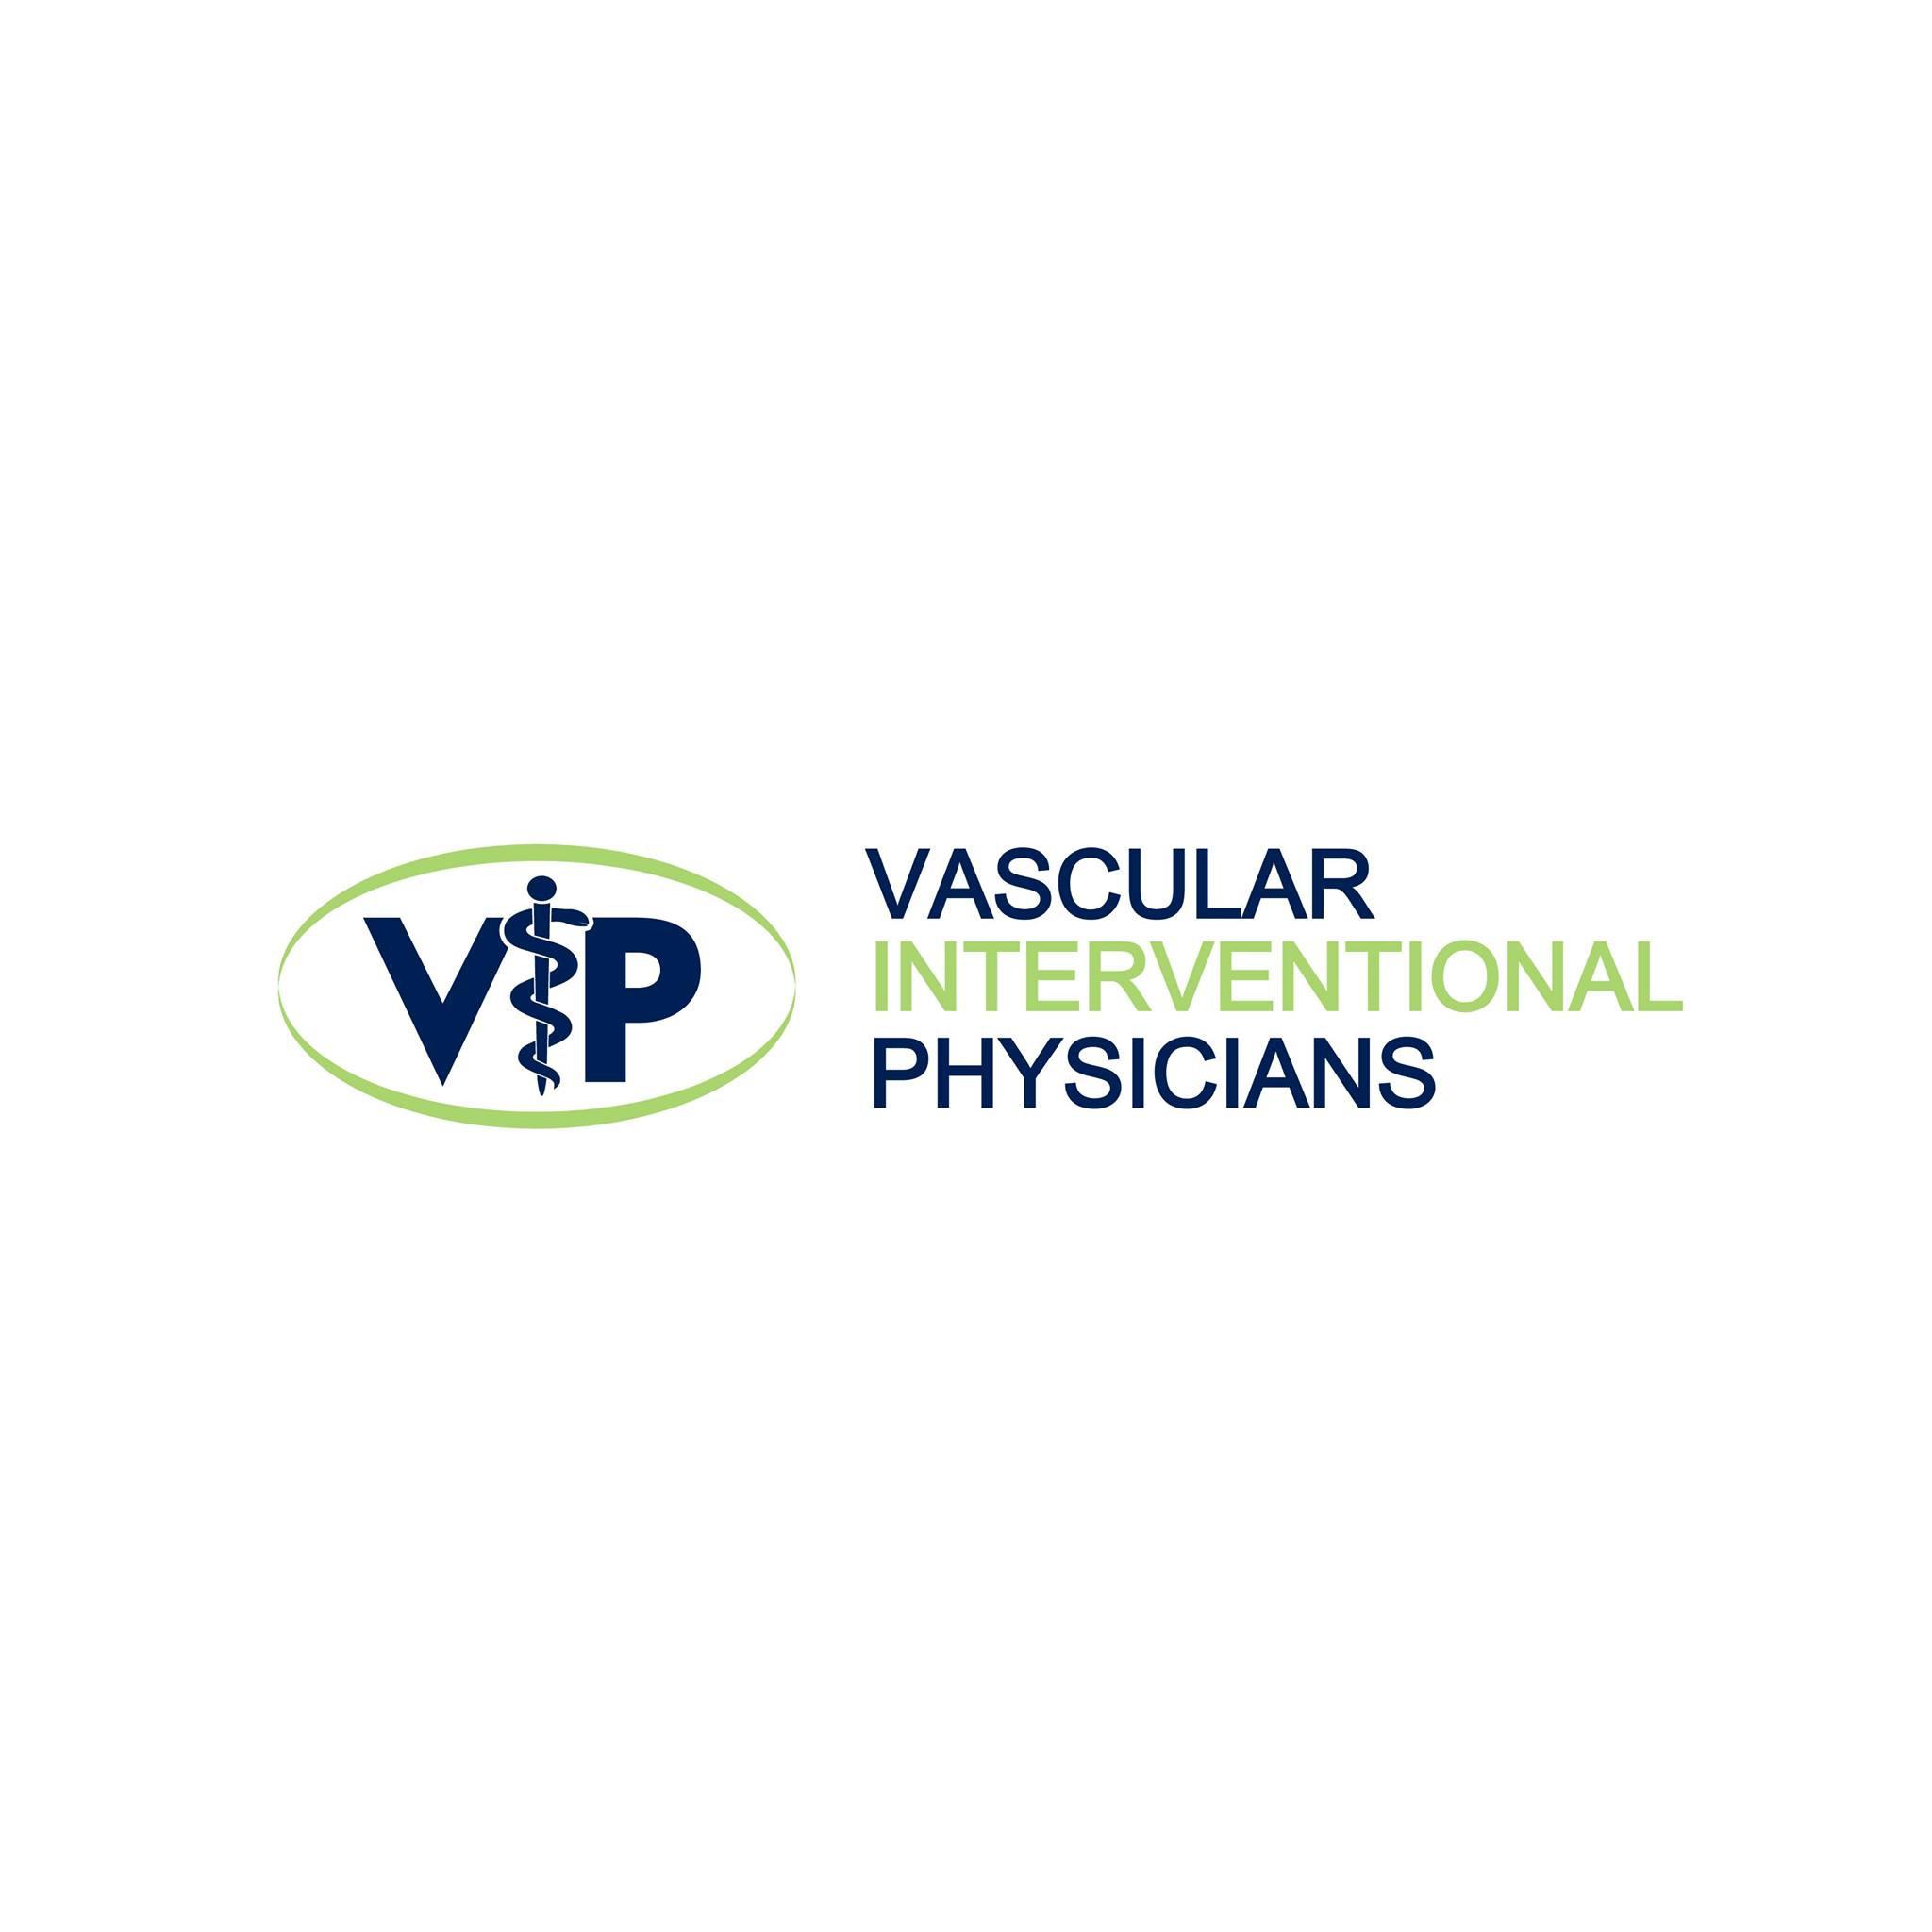 Vascular Interventional Physicians